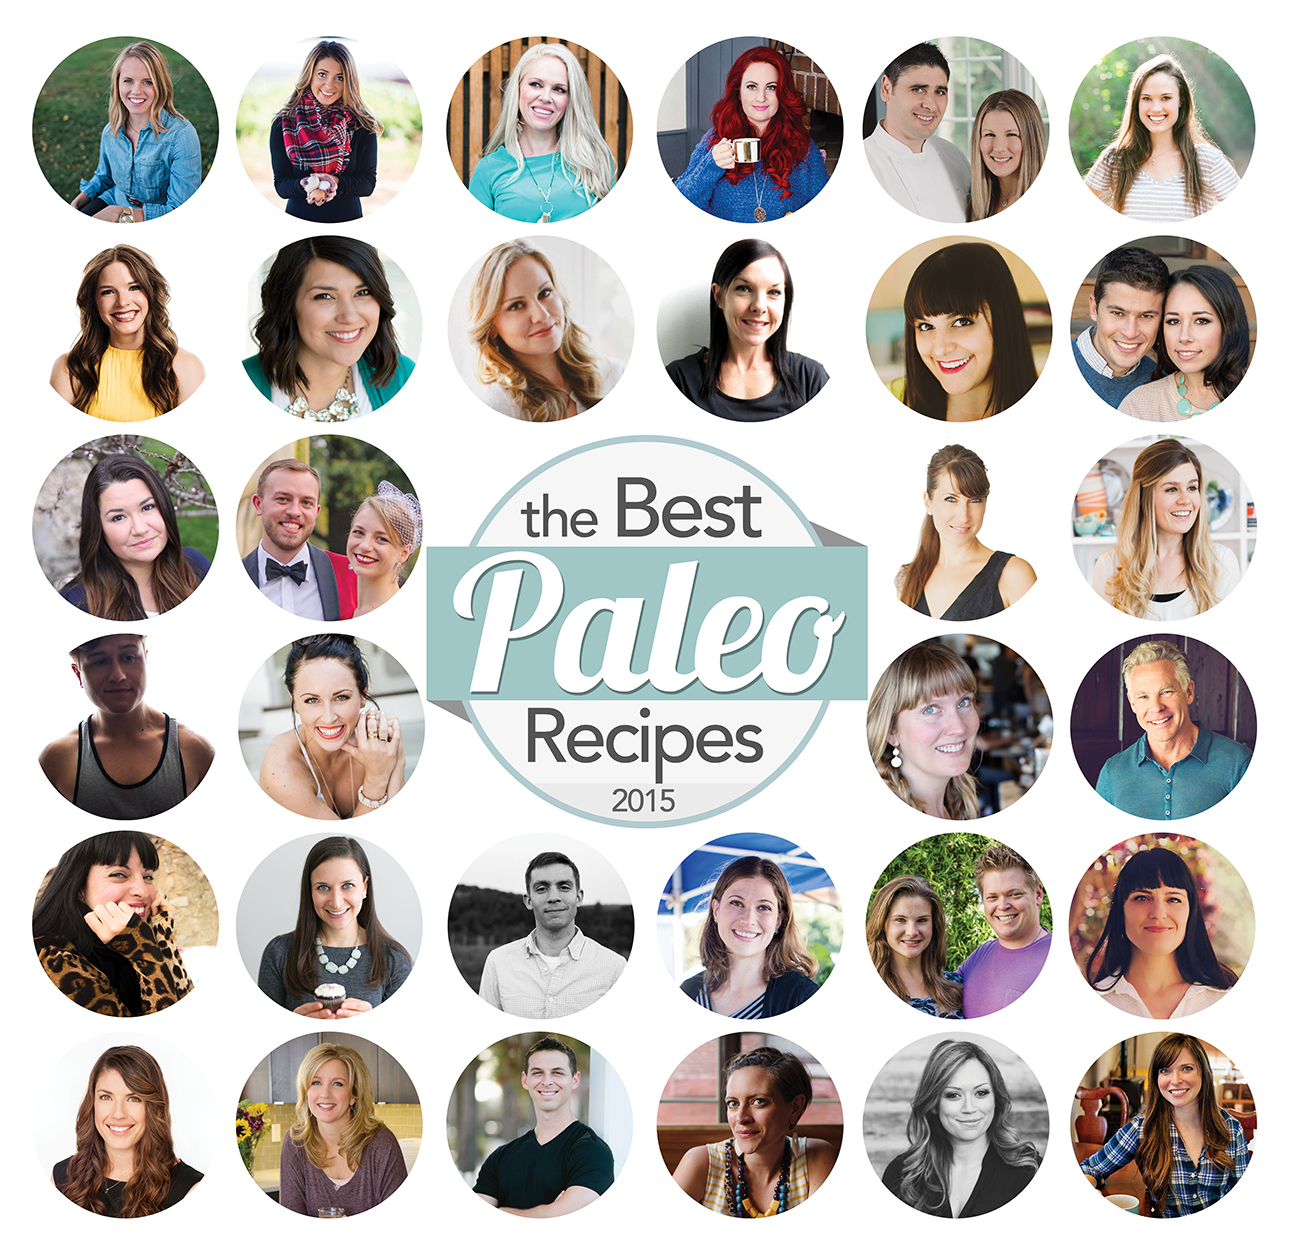 The Best Paleo Recipes of 2015 Contributors